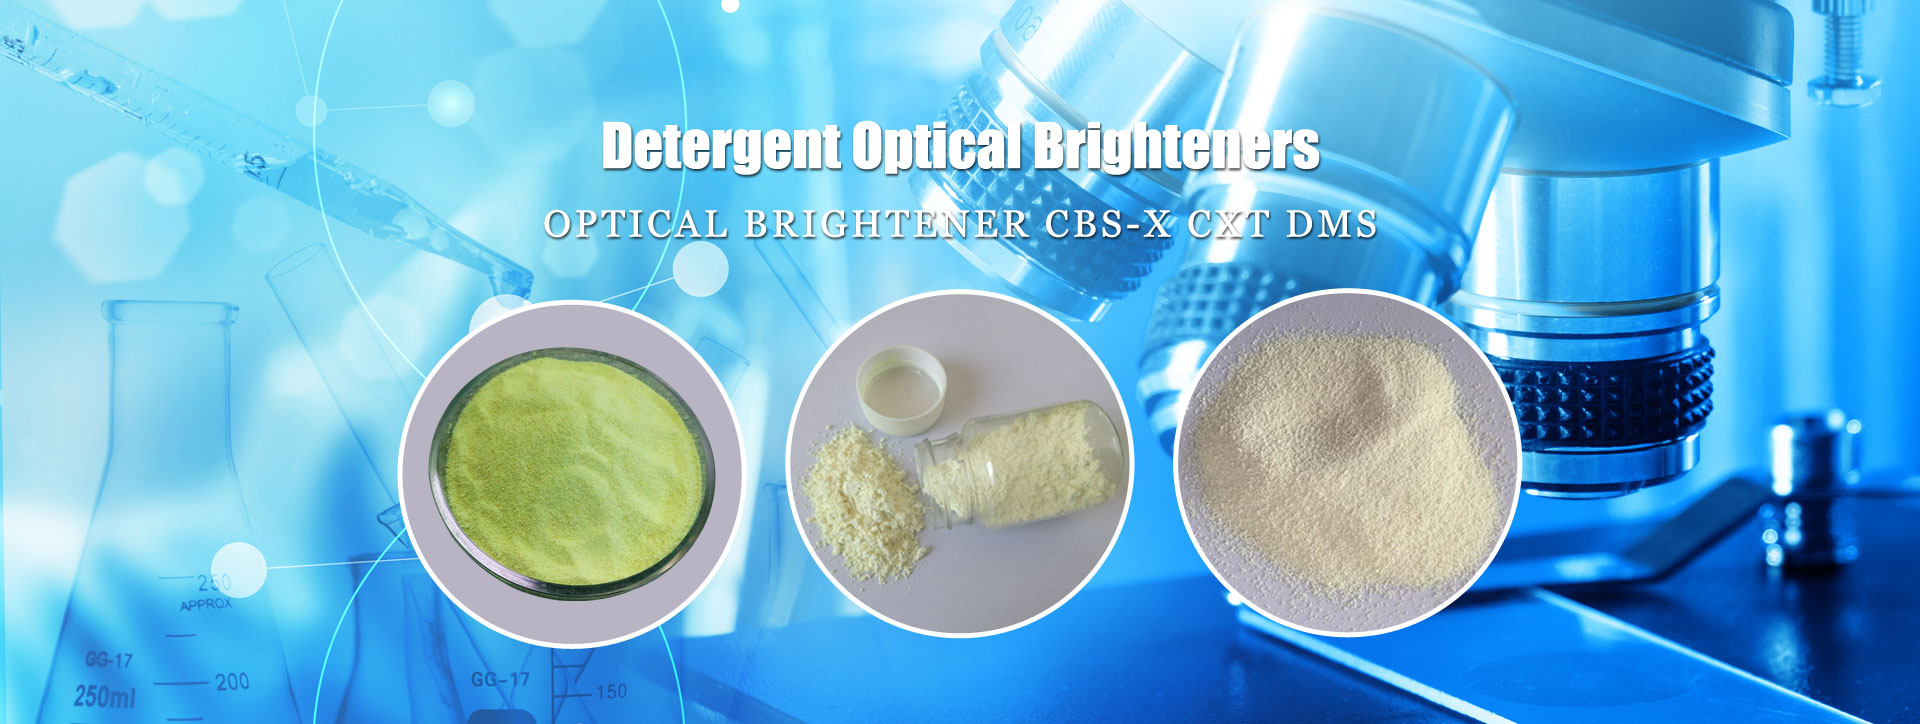 Detergent Optical Brighteners Factory